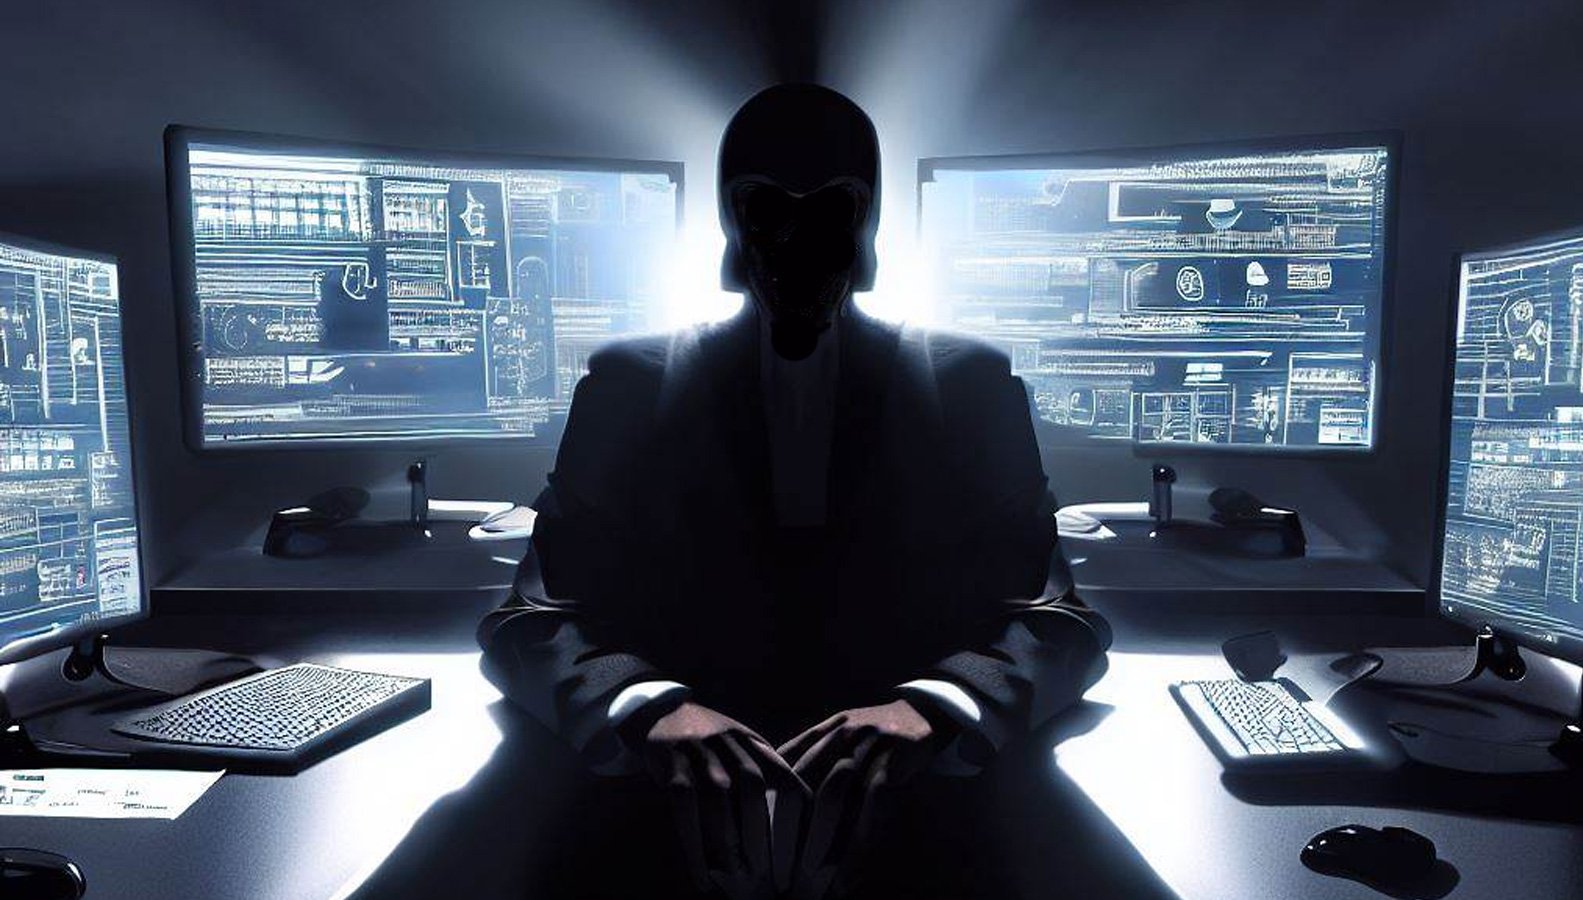 royal-ransomware-gang-adds-blacksuit-encryptor-to-their-arsenal